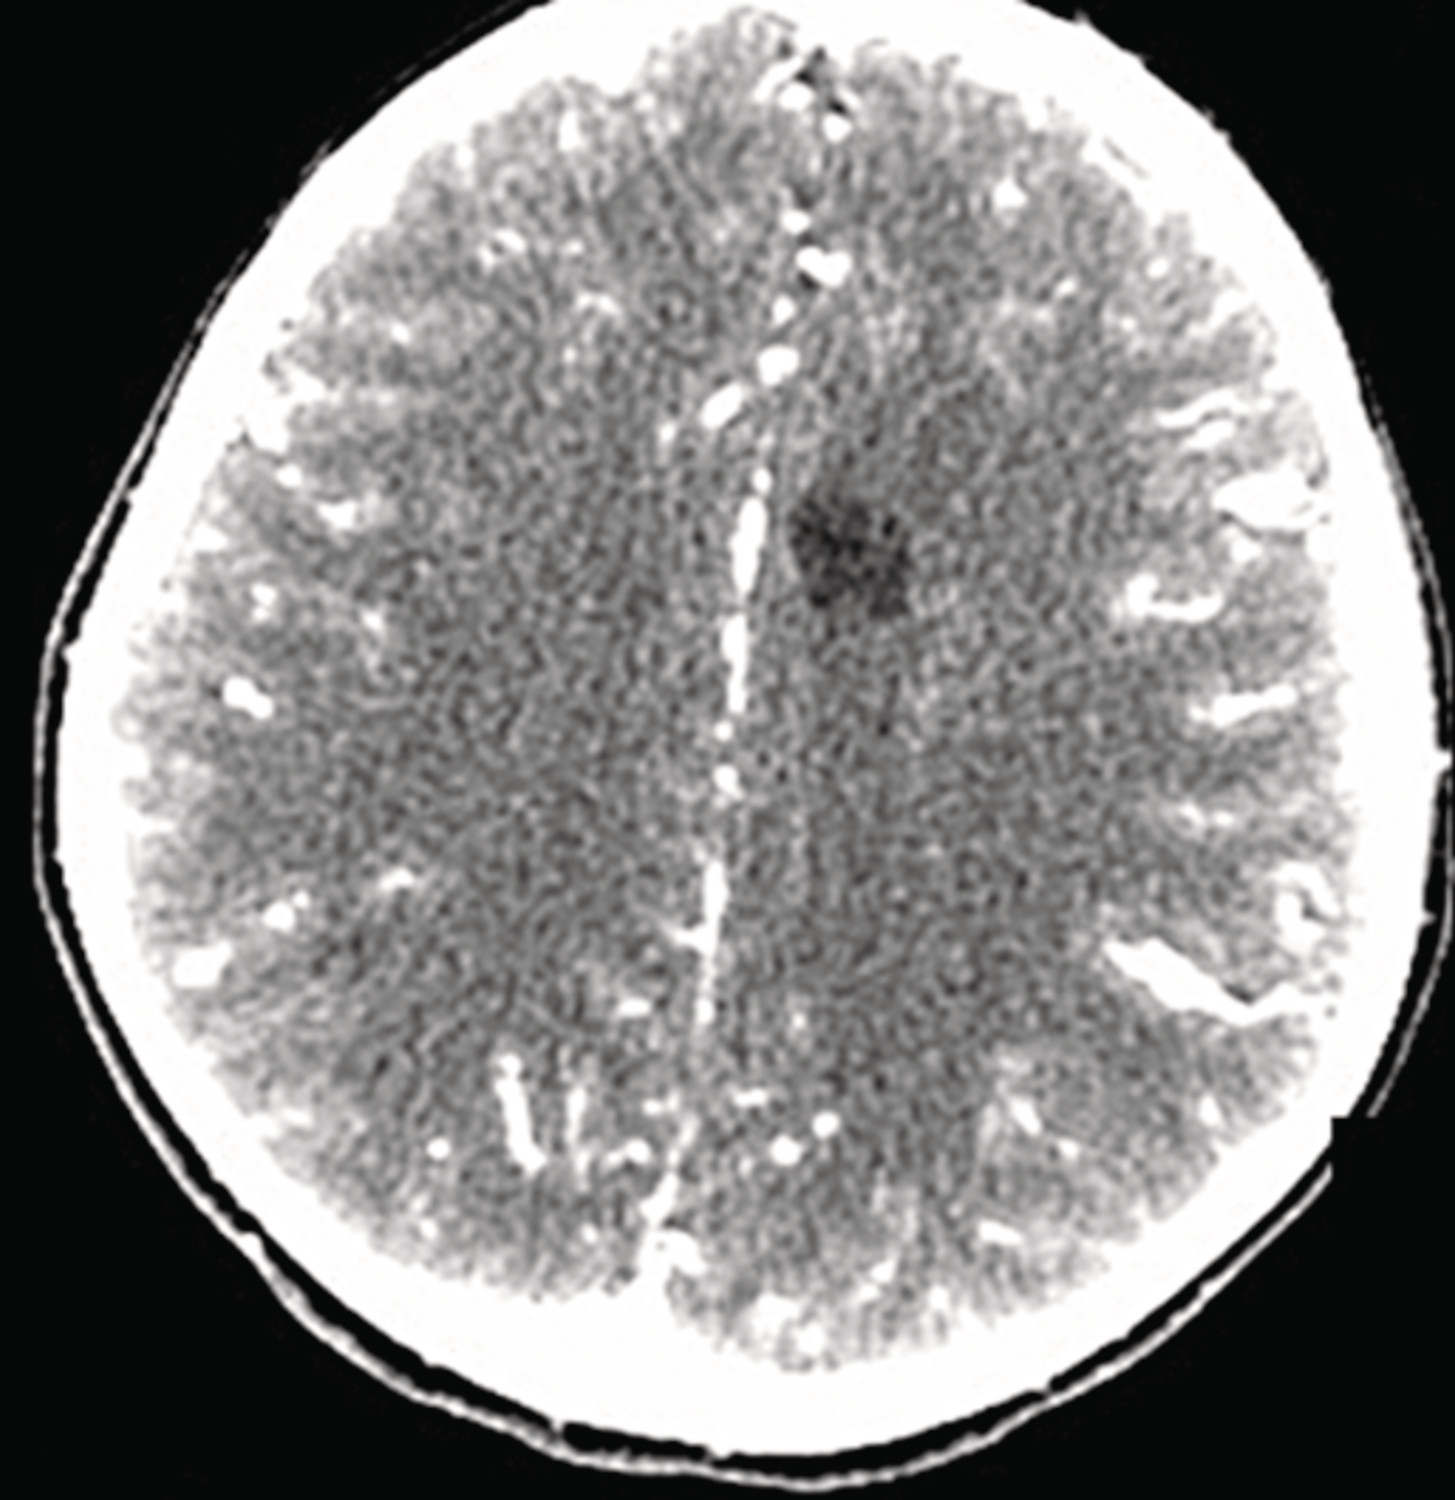 Localisation intranasale d’un projectile après un traumatisme balistique craniofacial - Figure 2